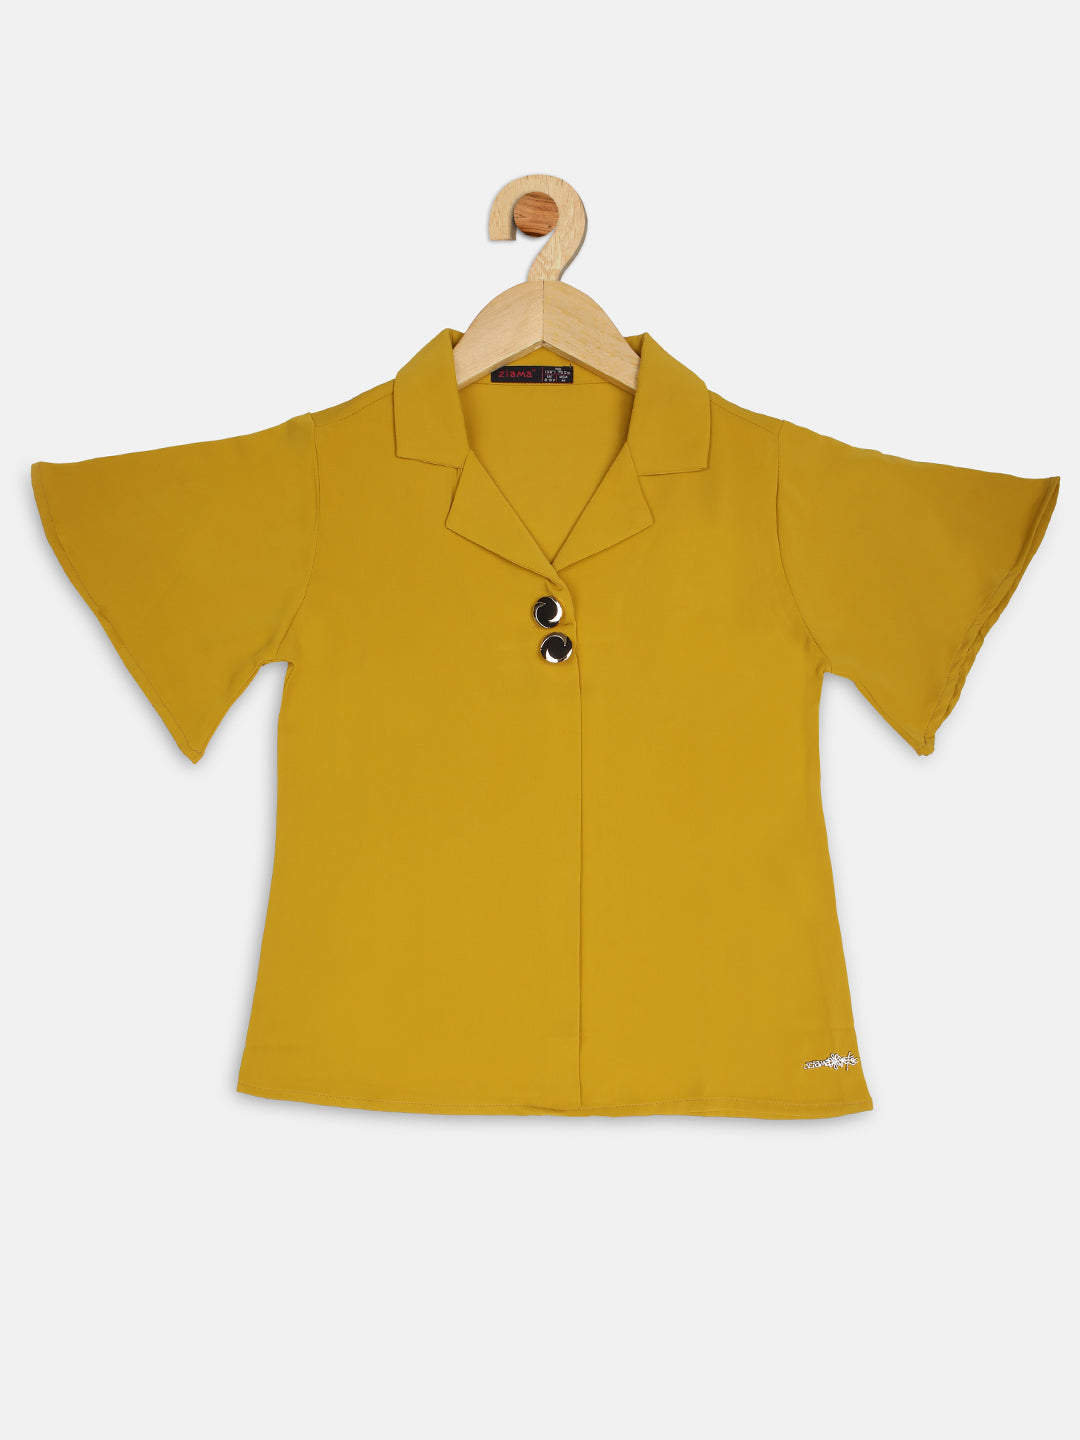 Pampolina Girls Solid Half Sleeve Textile  Top-Mustard